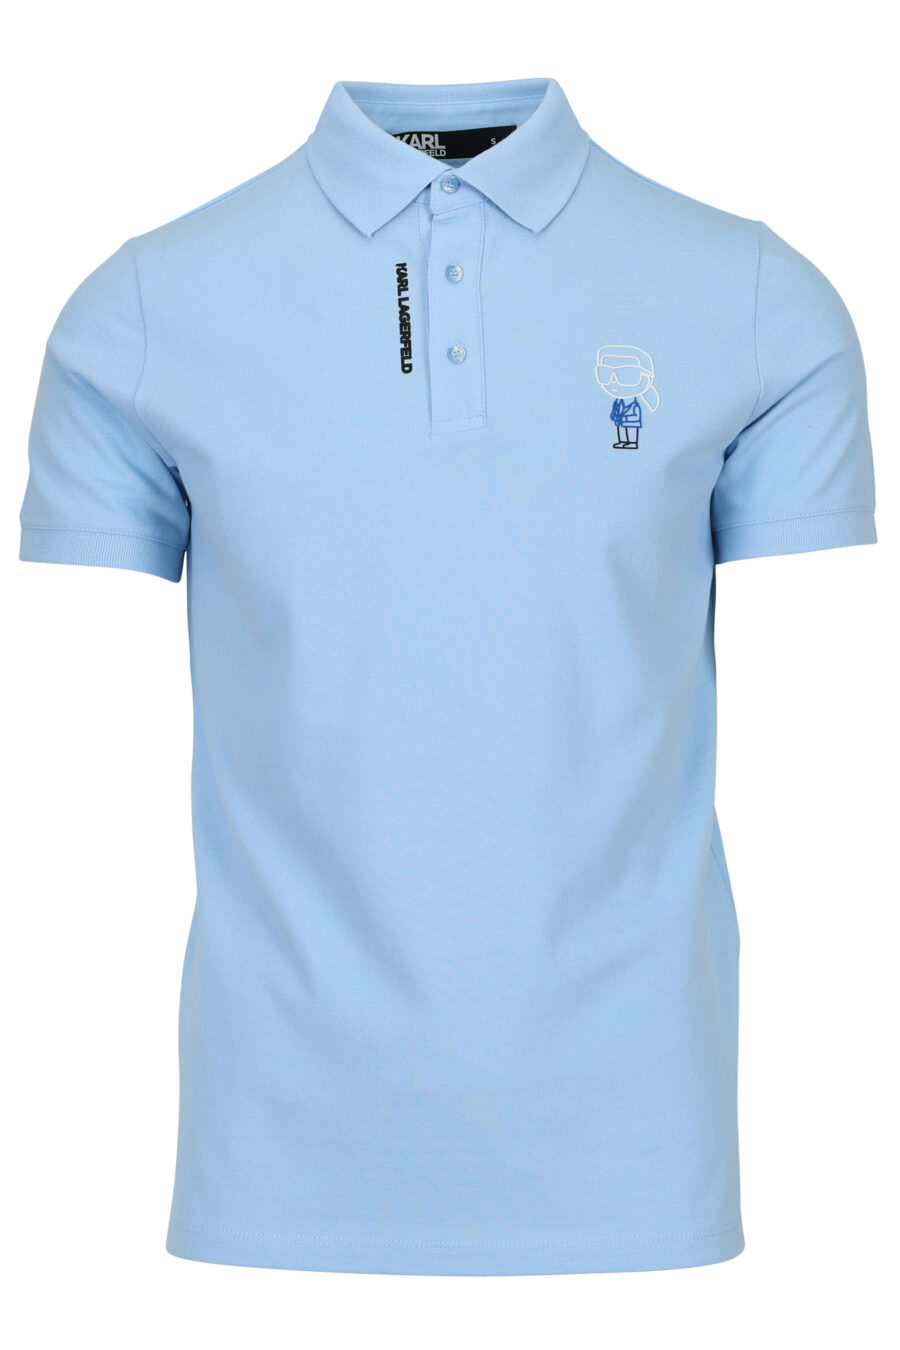 Pólo azul claro com mini-logotipo vertical "karl" - 4062226785921